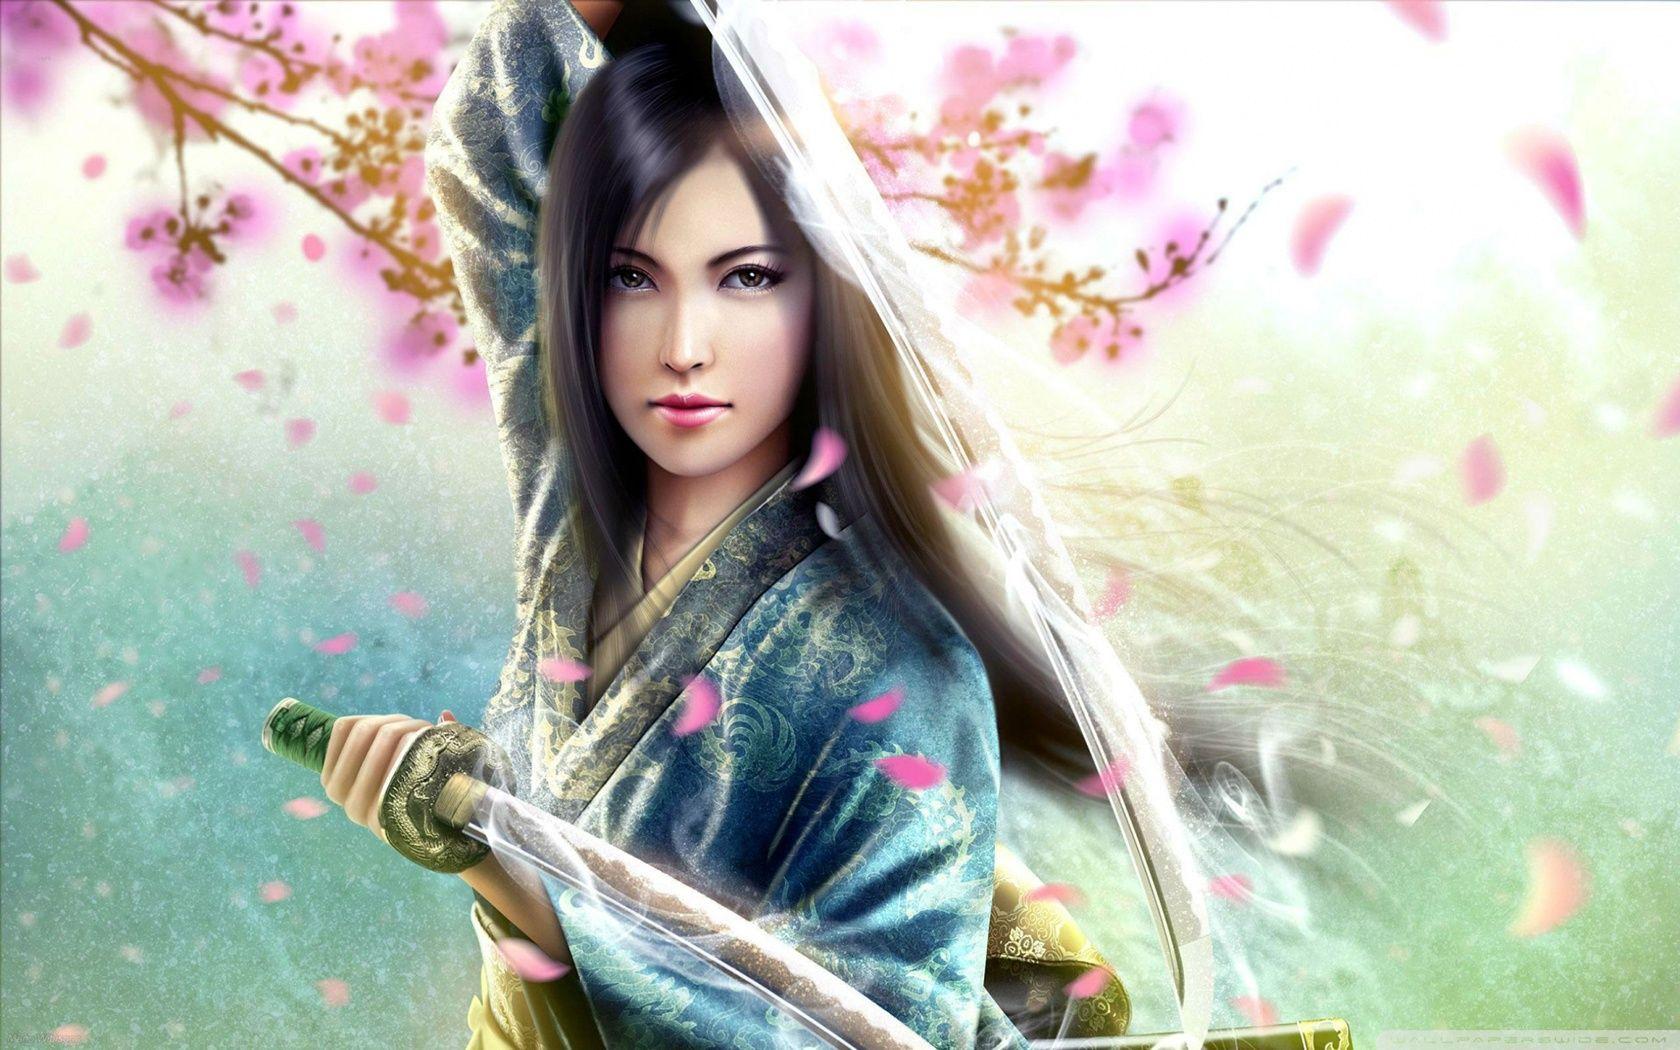 Female Samurai Wallpapers - Top Free Female Samurai ...